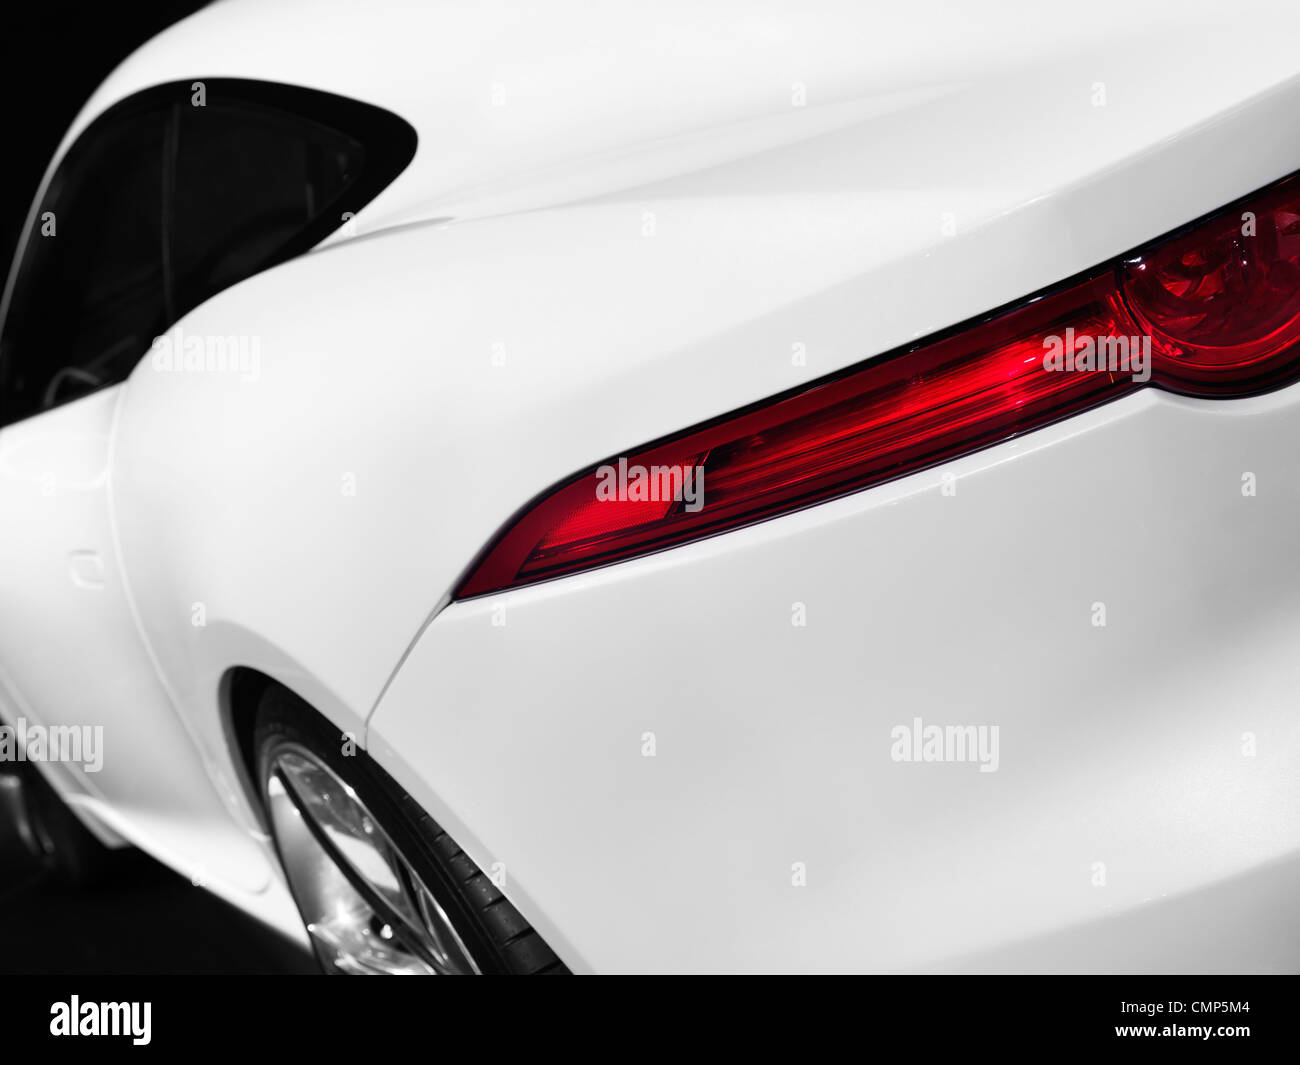 Jaguar tail light hi-res stock photography and images - Alamy